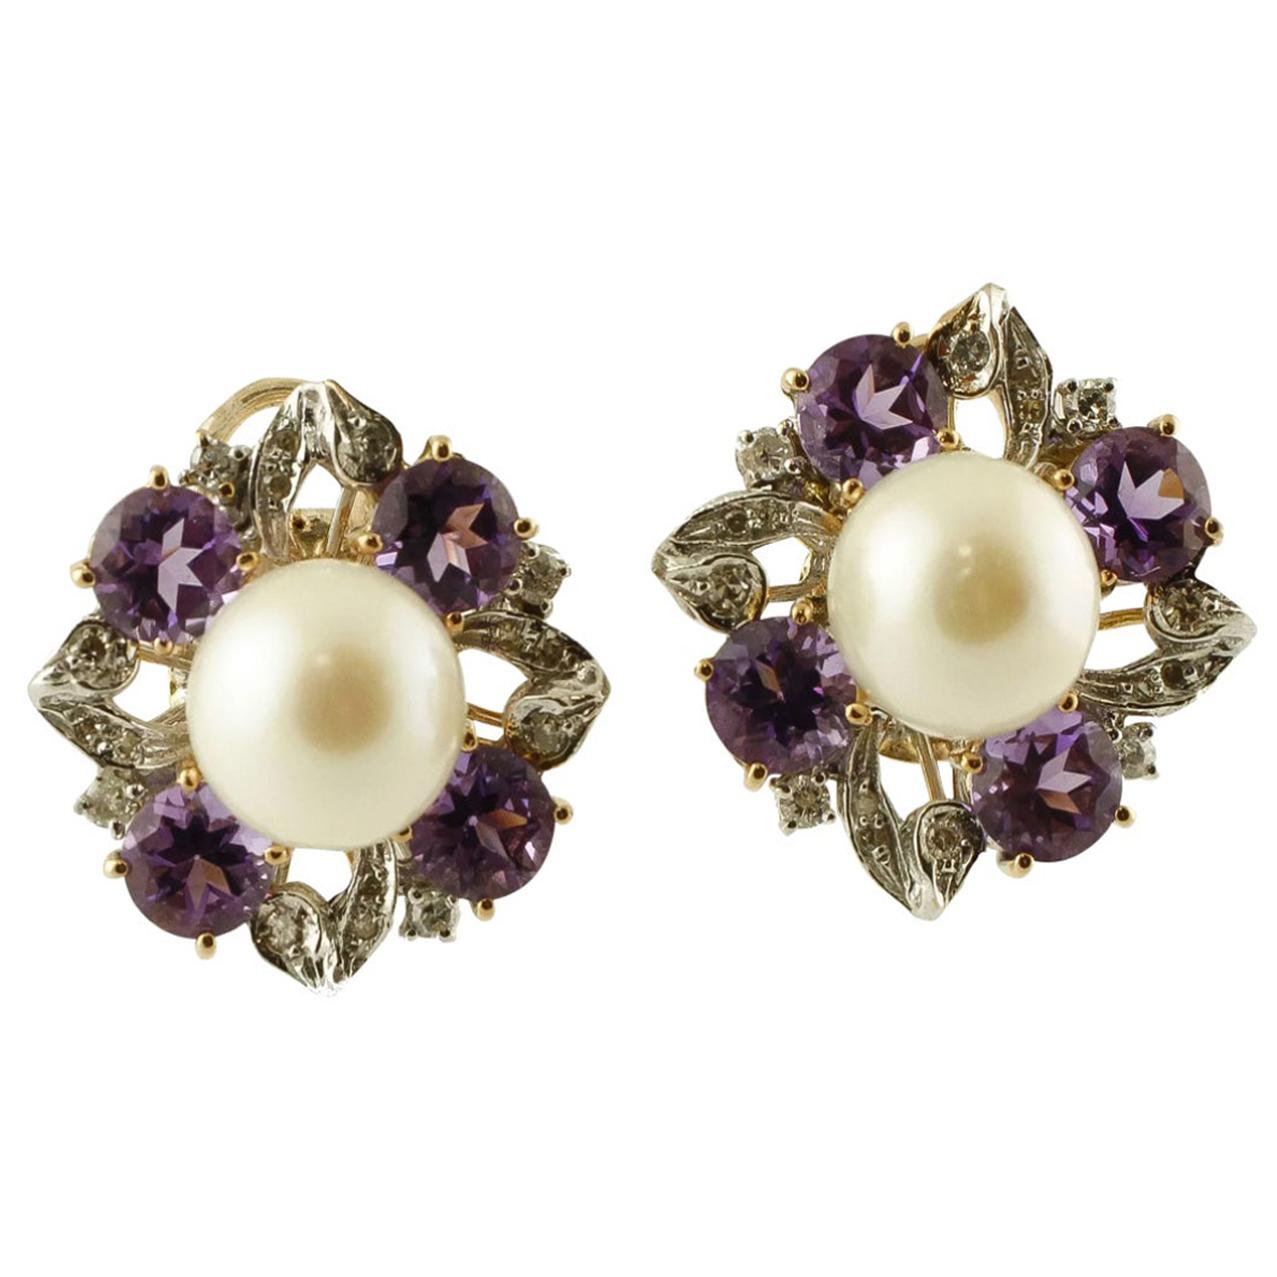 White Diamonds, Amethyst, South-Sea Pearls, 14k Rose/White Gold Clip-On Earrings